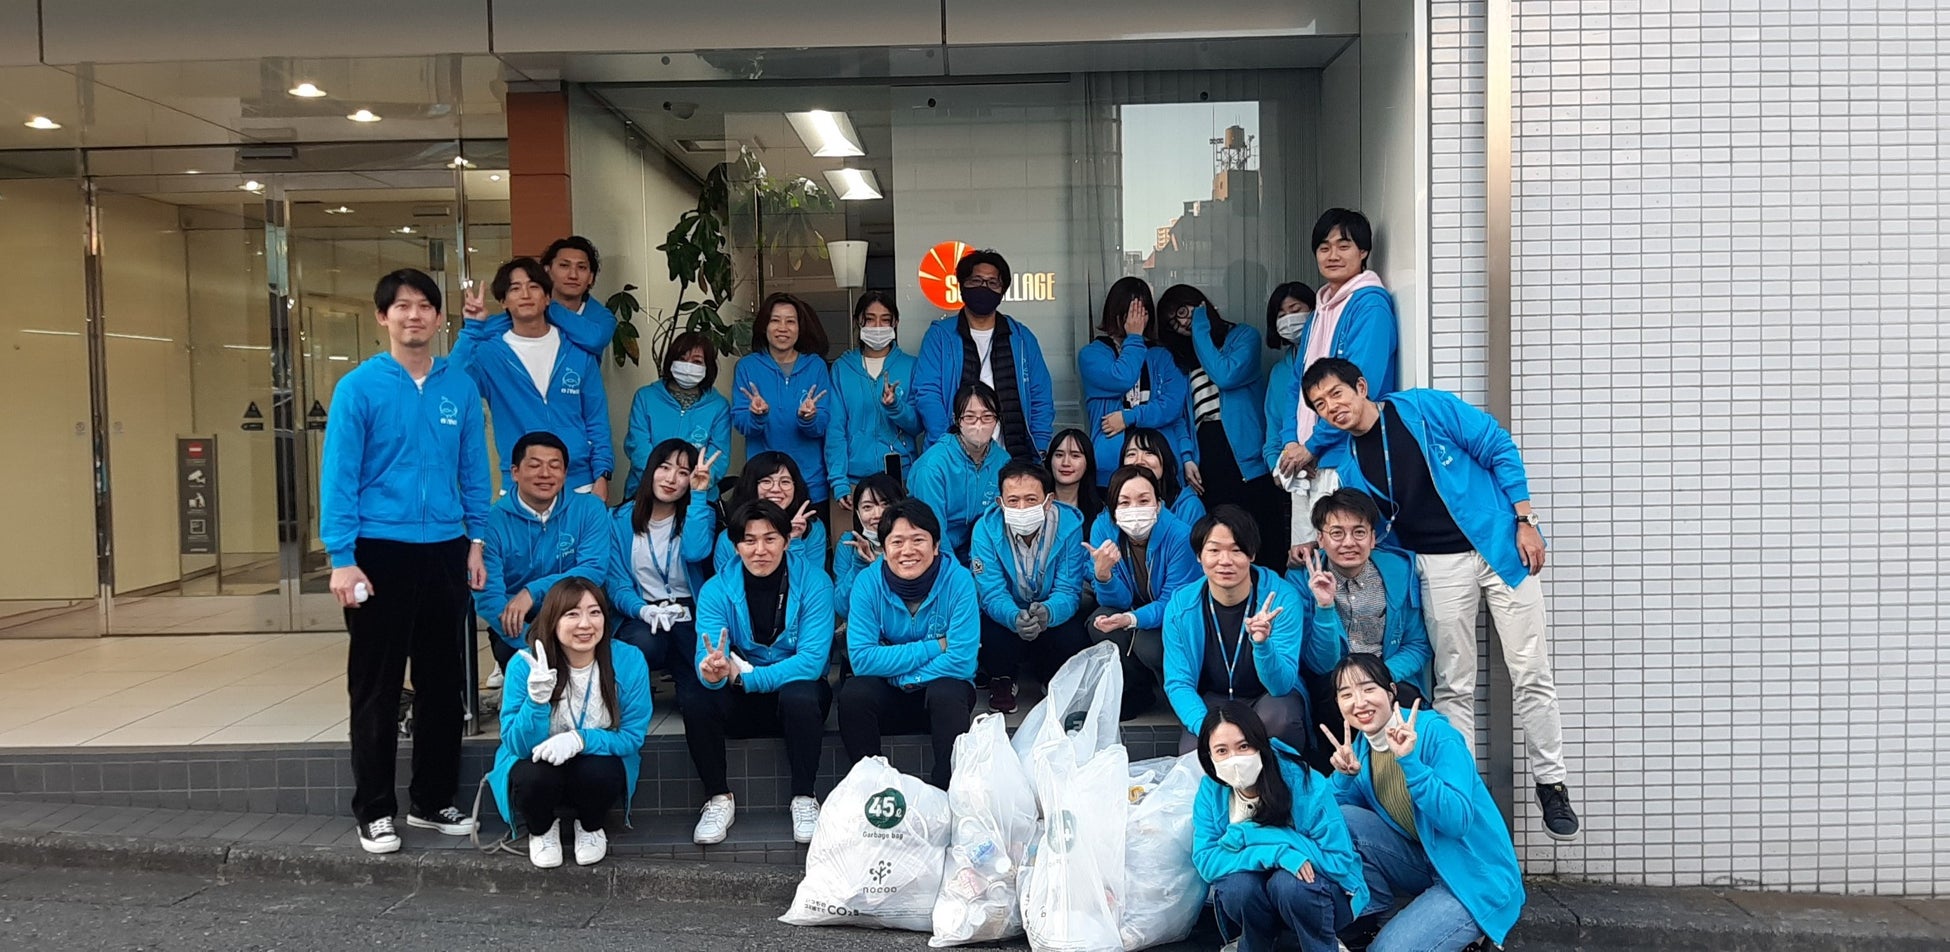 iYell株式会社、社員参加の地域清掃活動「iYellists※渋谷清掃」を実施